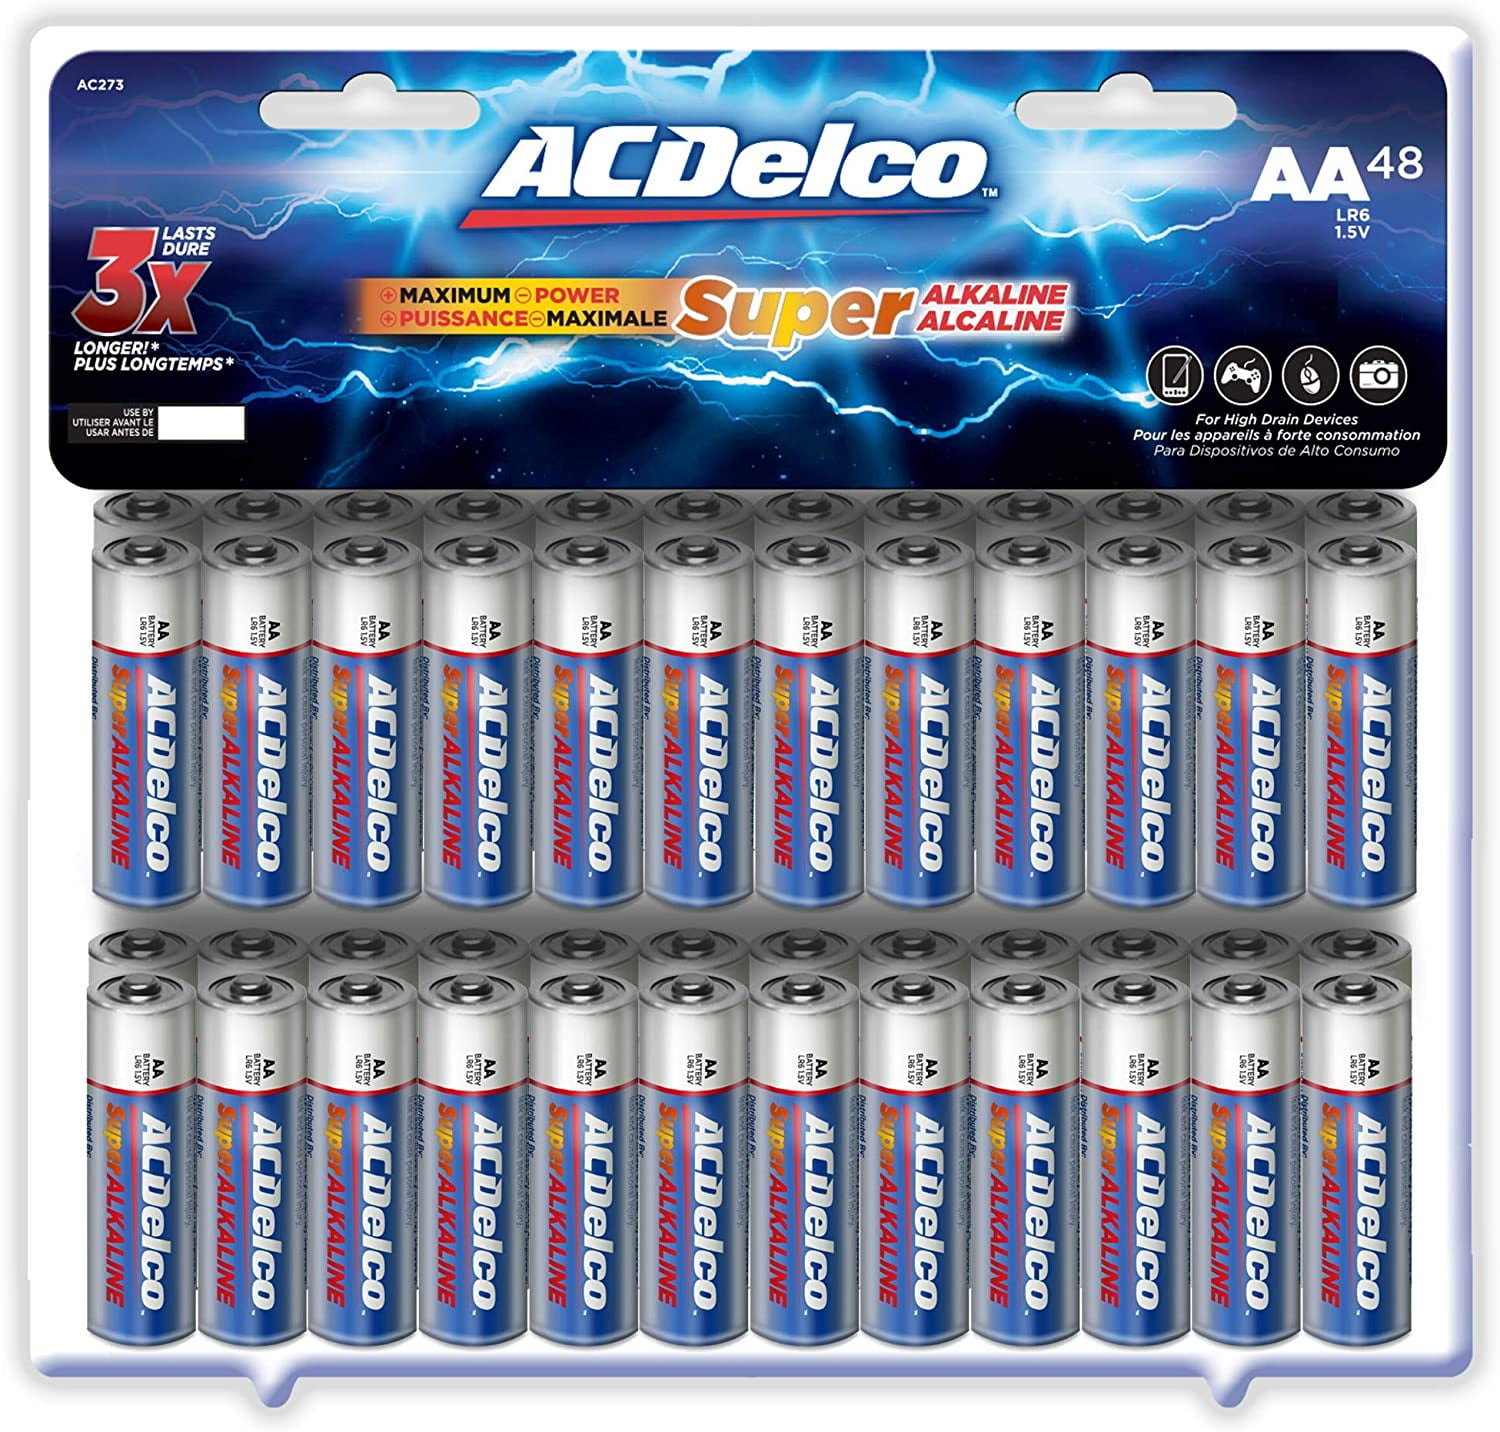 Battery super Alkaline AA. Алкалайн батарейки. Супер алкалин. Свечи Alkaline для авто.